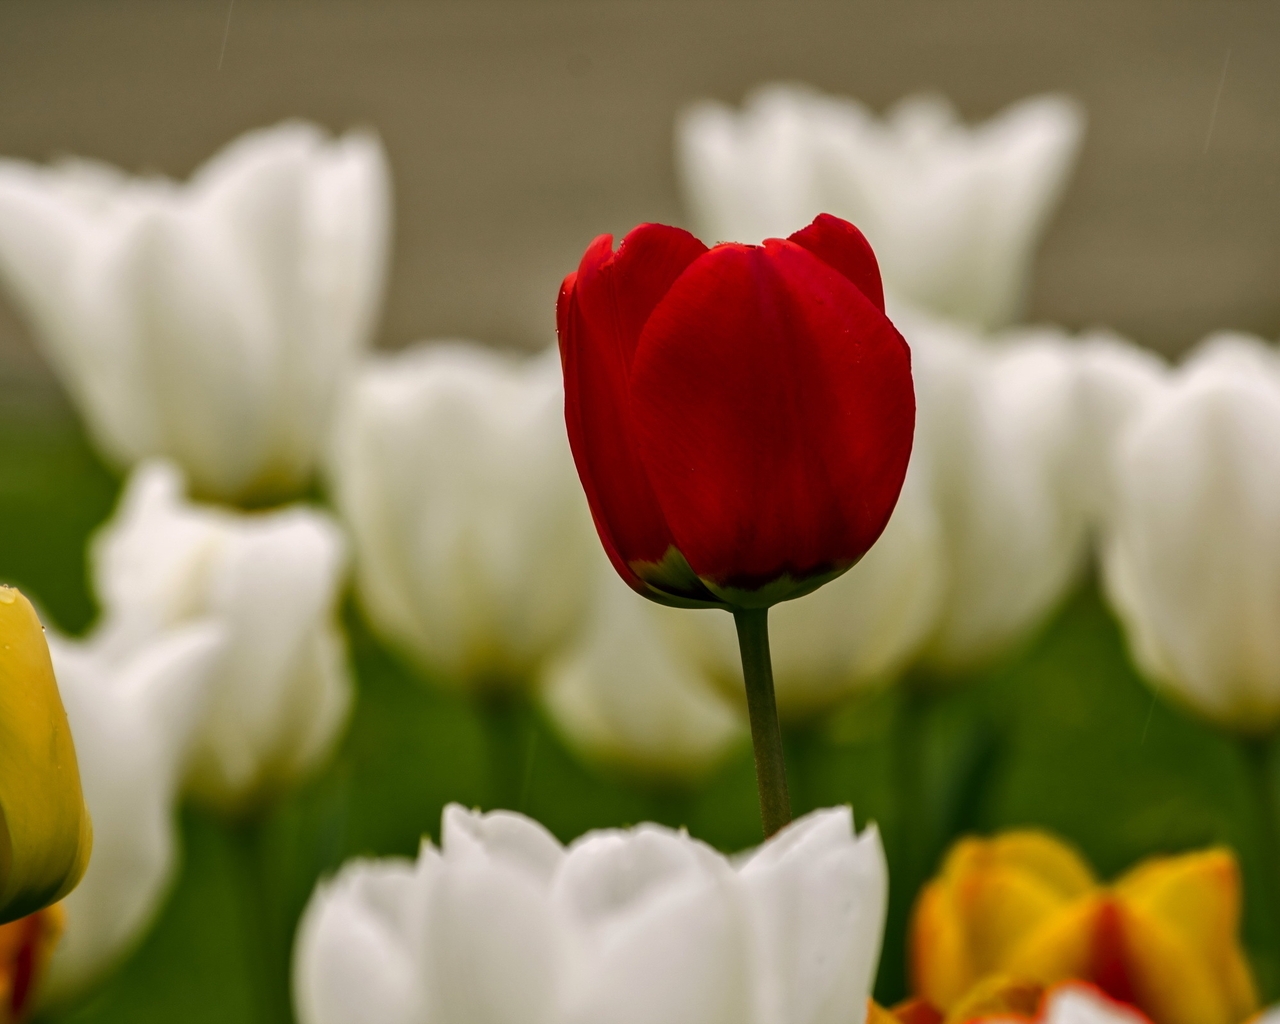 Image: Tulips, red, white, yellow